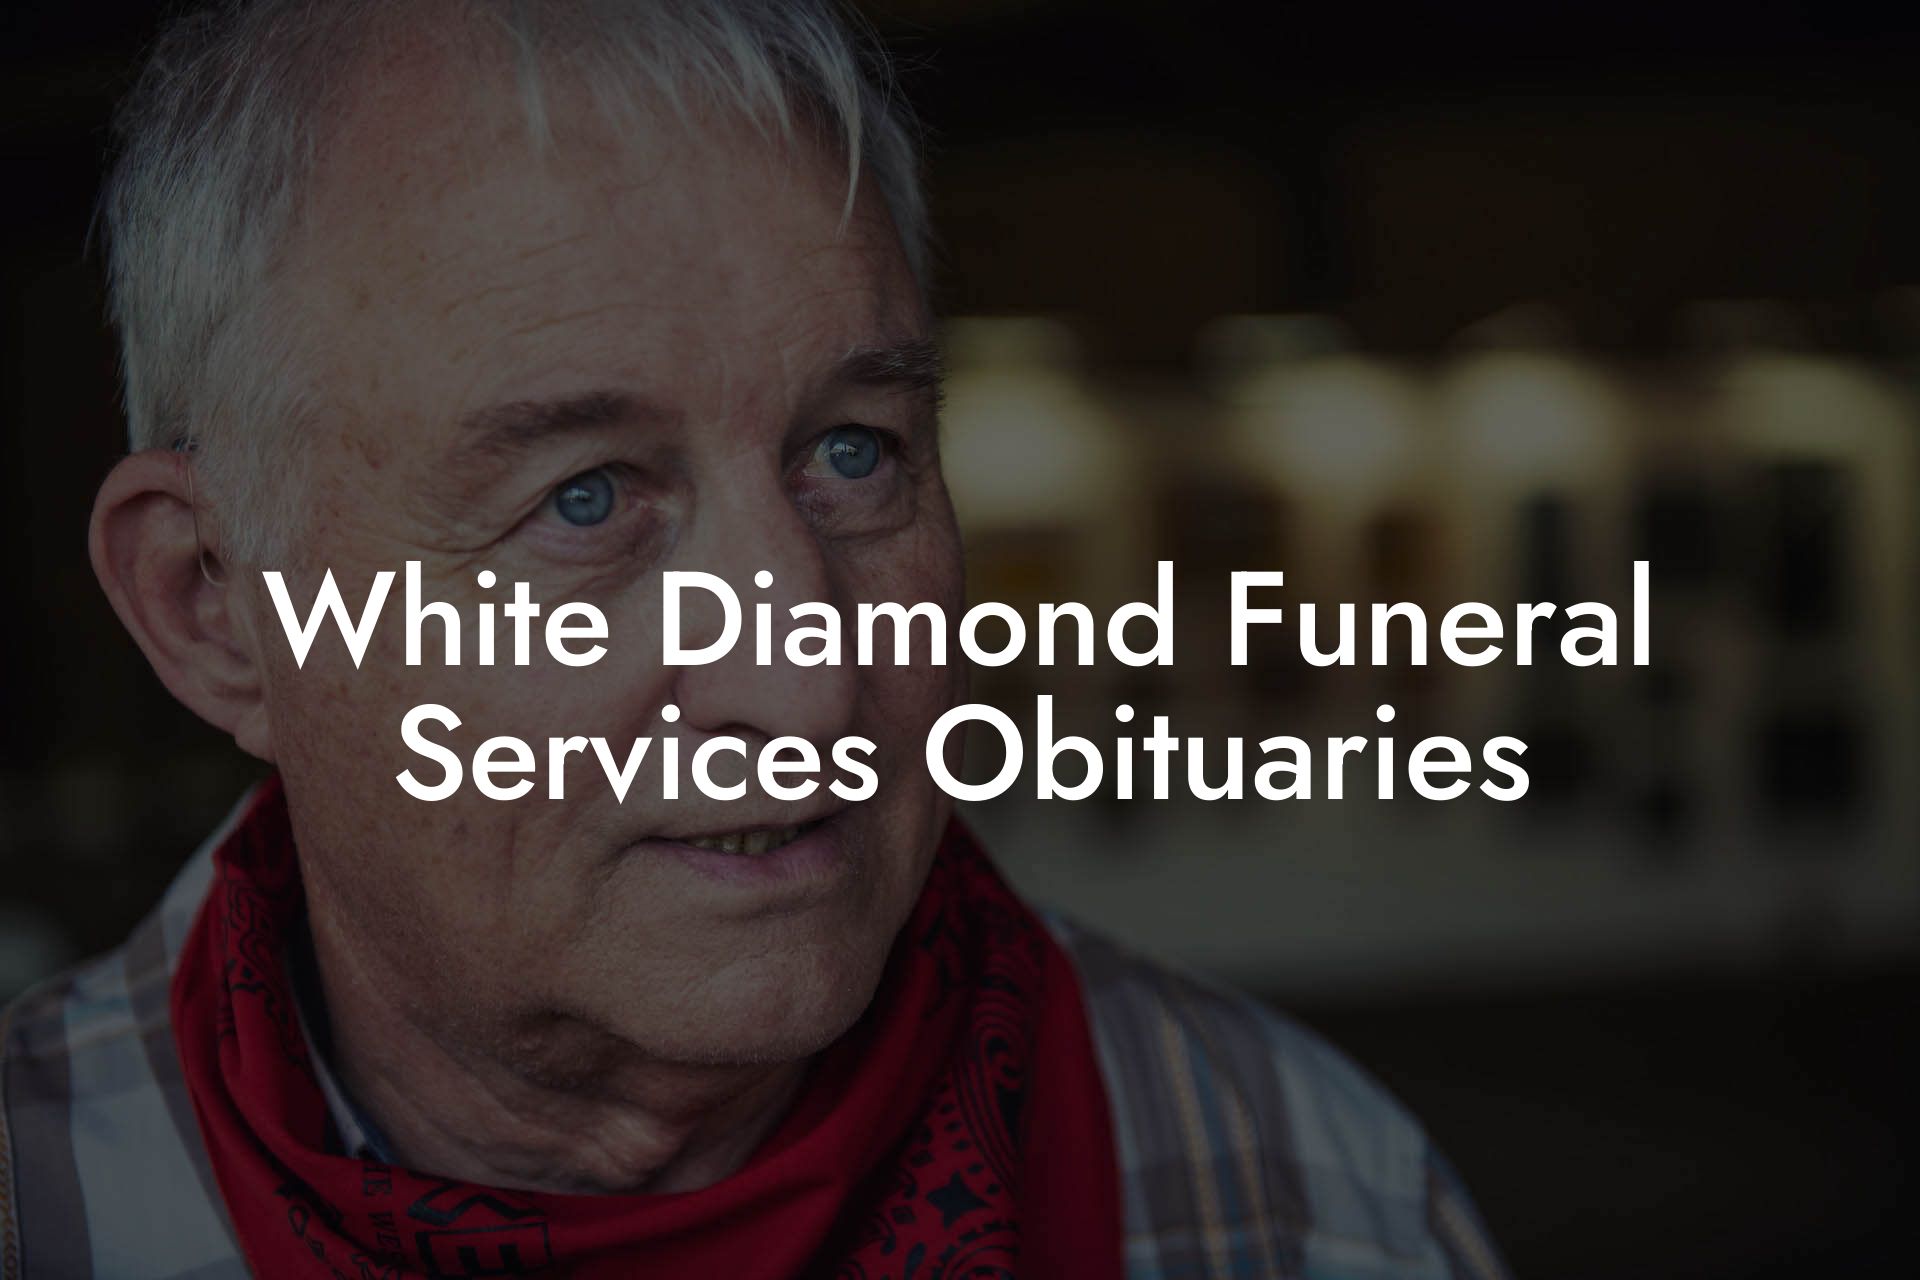 White Diamond Funeral Services Obituaries